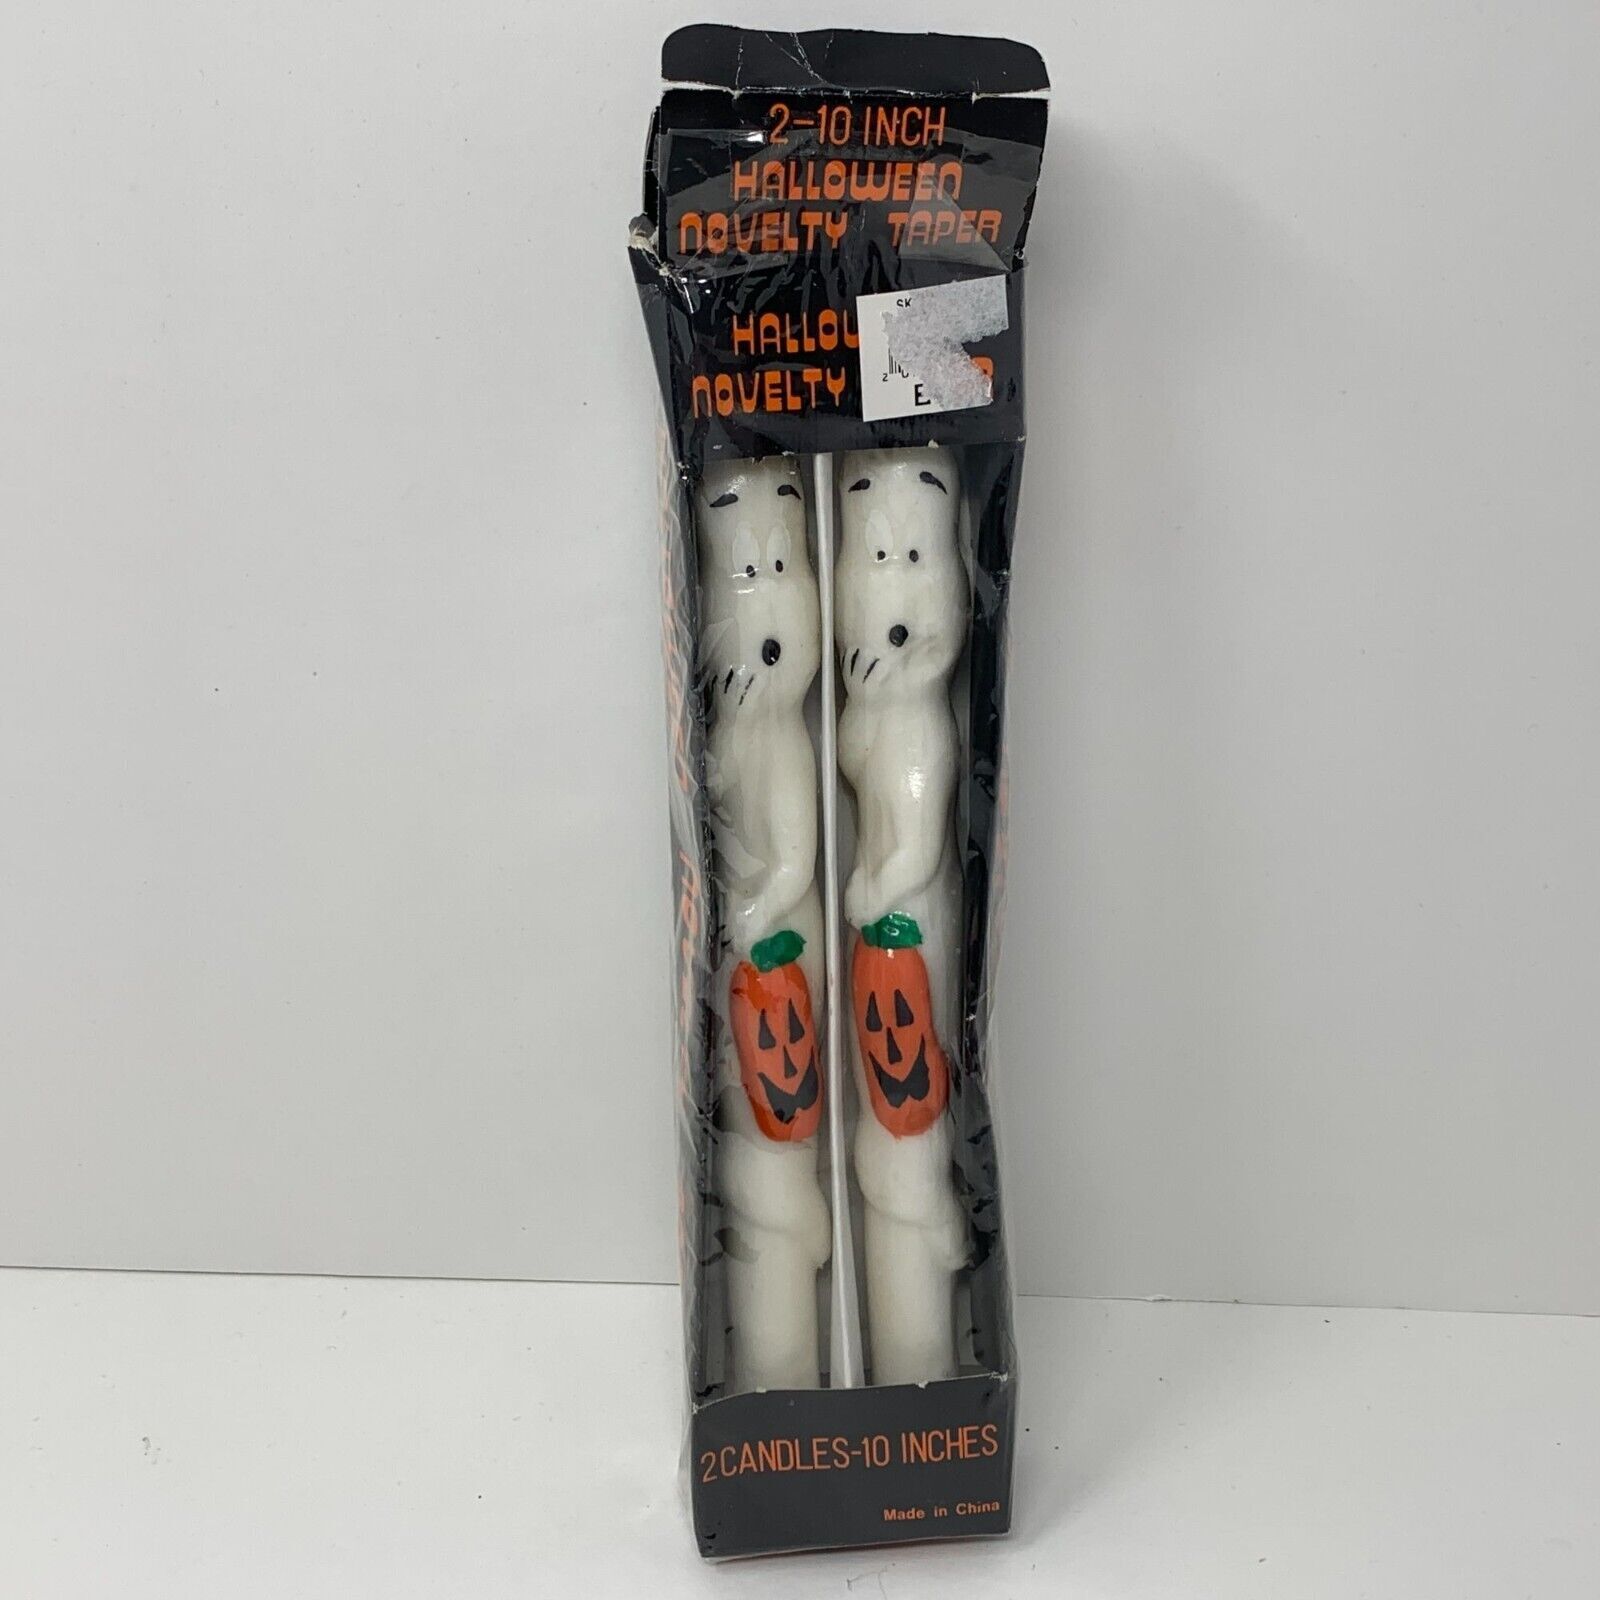 NEW Halloween candles 10 inch taper candlesticks ghosts pumpkins pair novelty